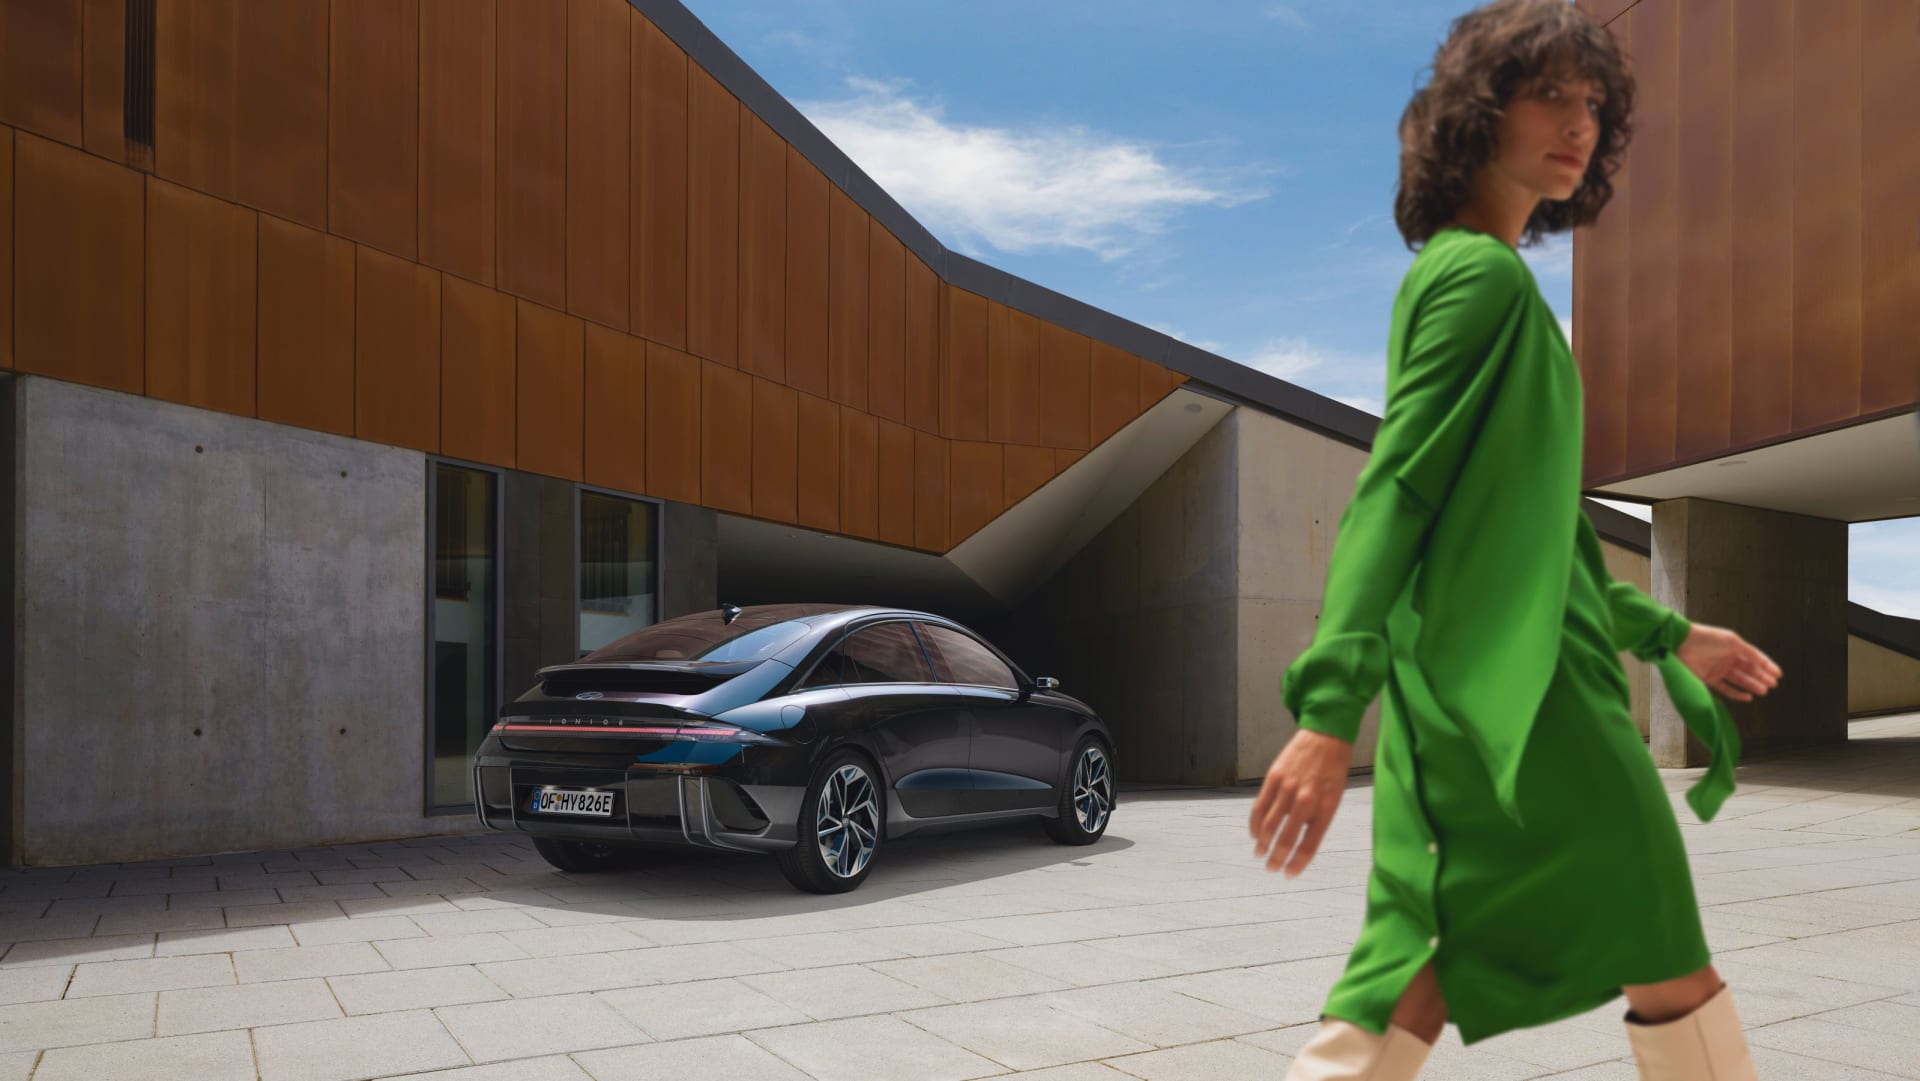 Elektromobil budoucnosti se jmenuje Hyundai Ioniq 6